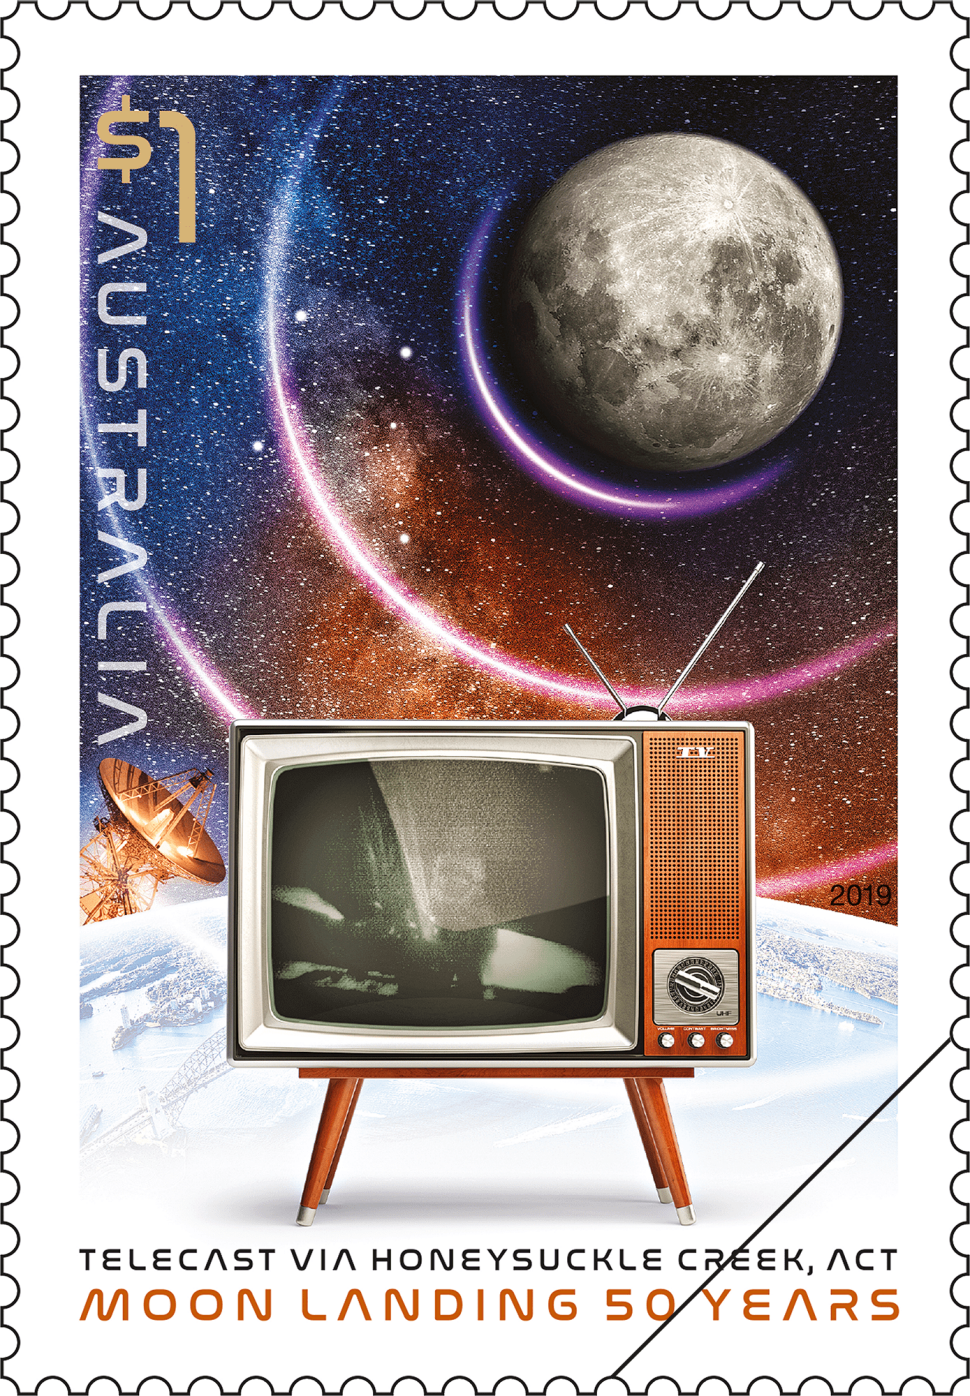 Telecast via Honeysuckle Creek stamp